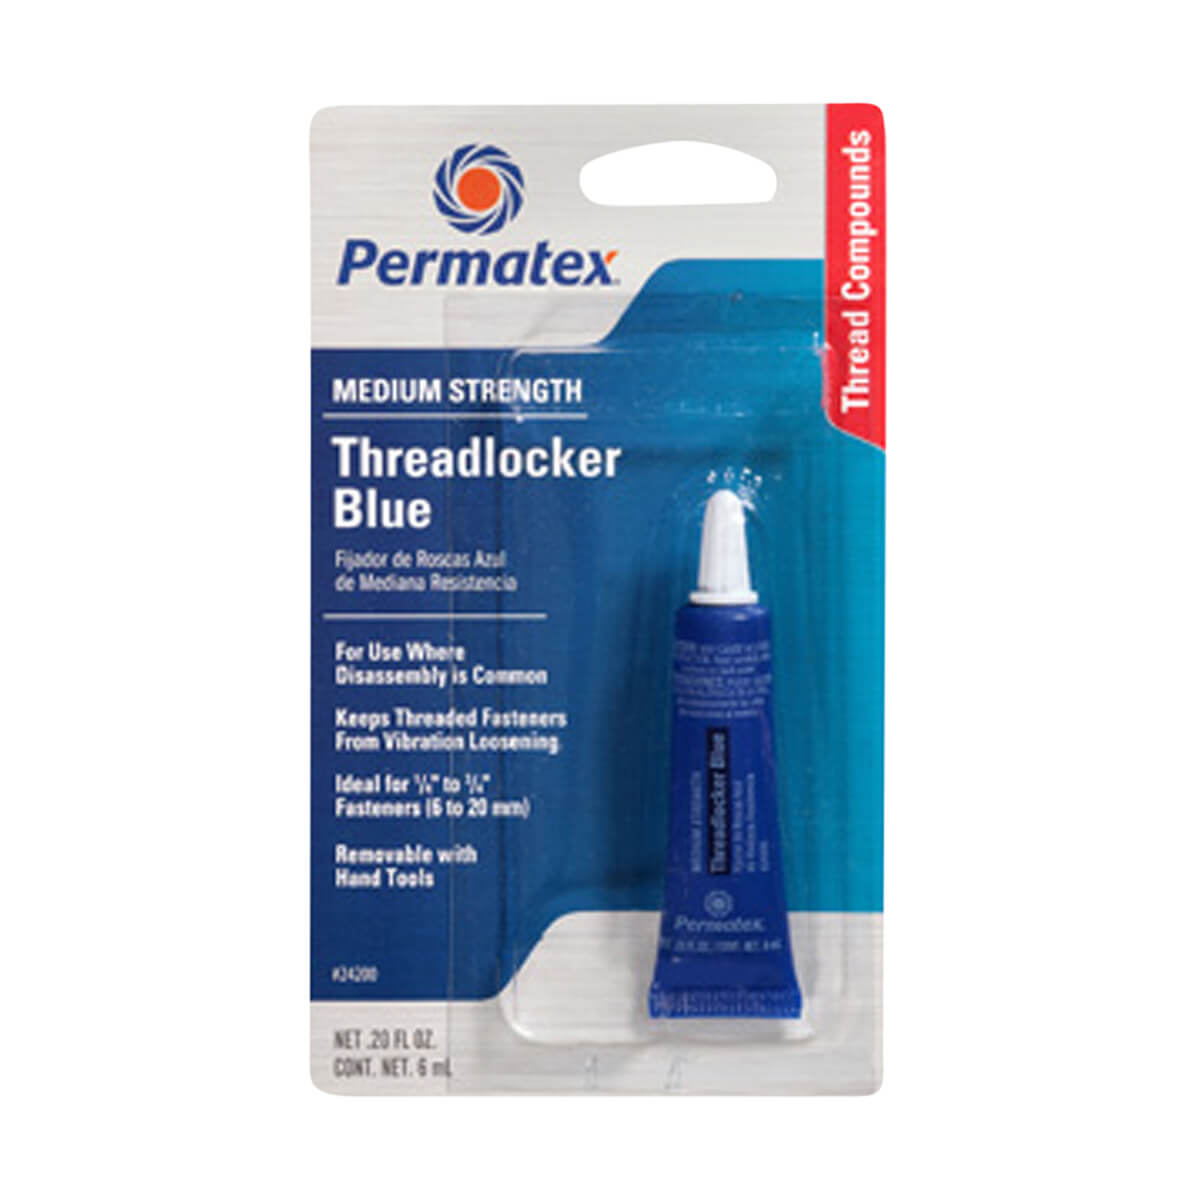 Permatex® Medium Strength Threadlocker BLUE - 6 mL